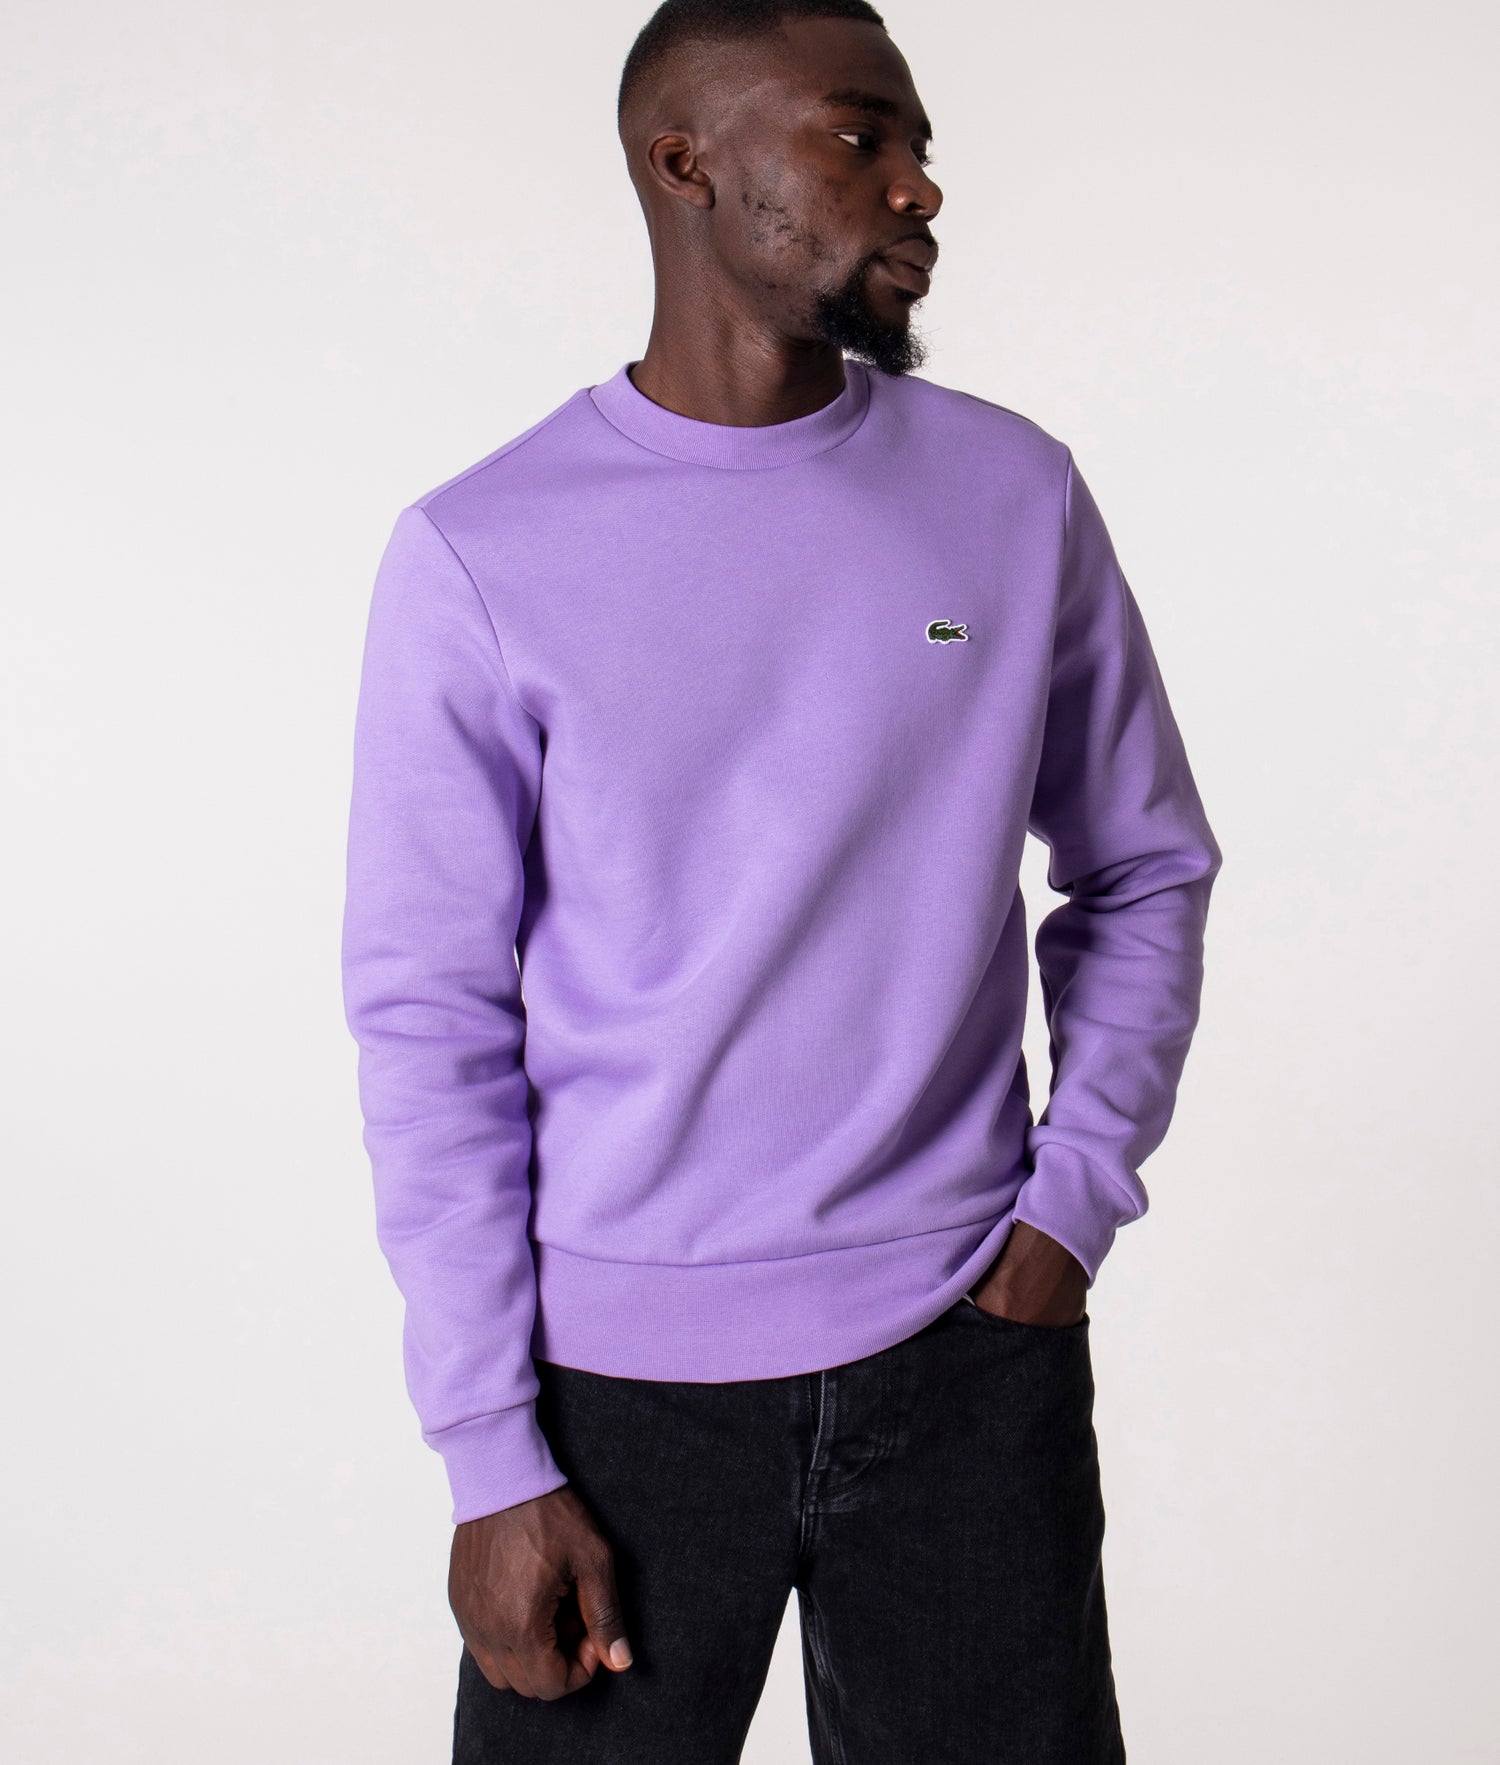 Lacoste Fit | Brushed Neva Cotton Purple EQVVS Sweatshirt | Relaxed